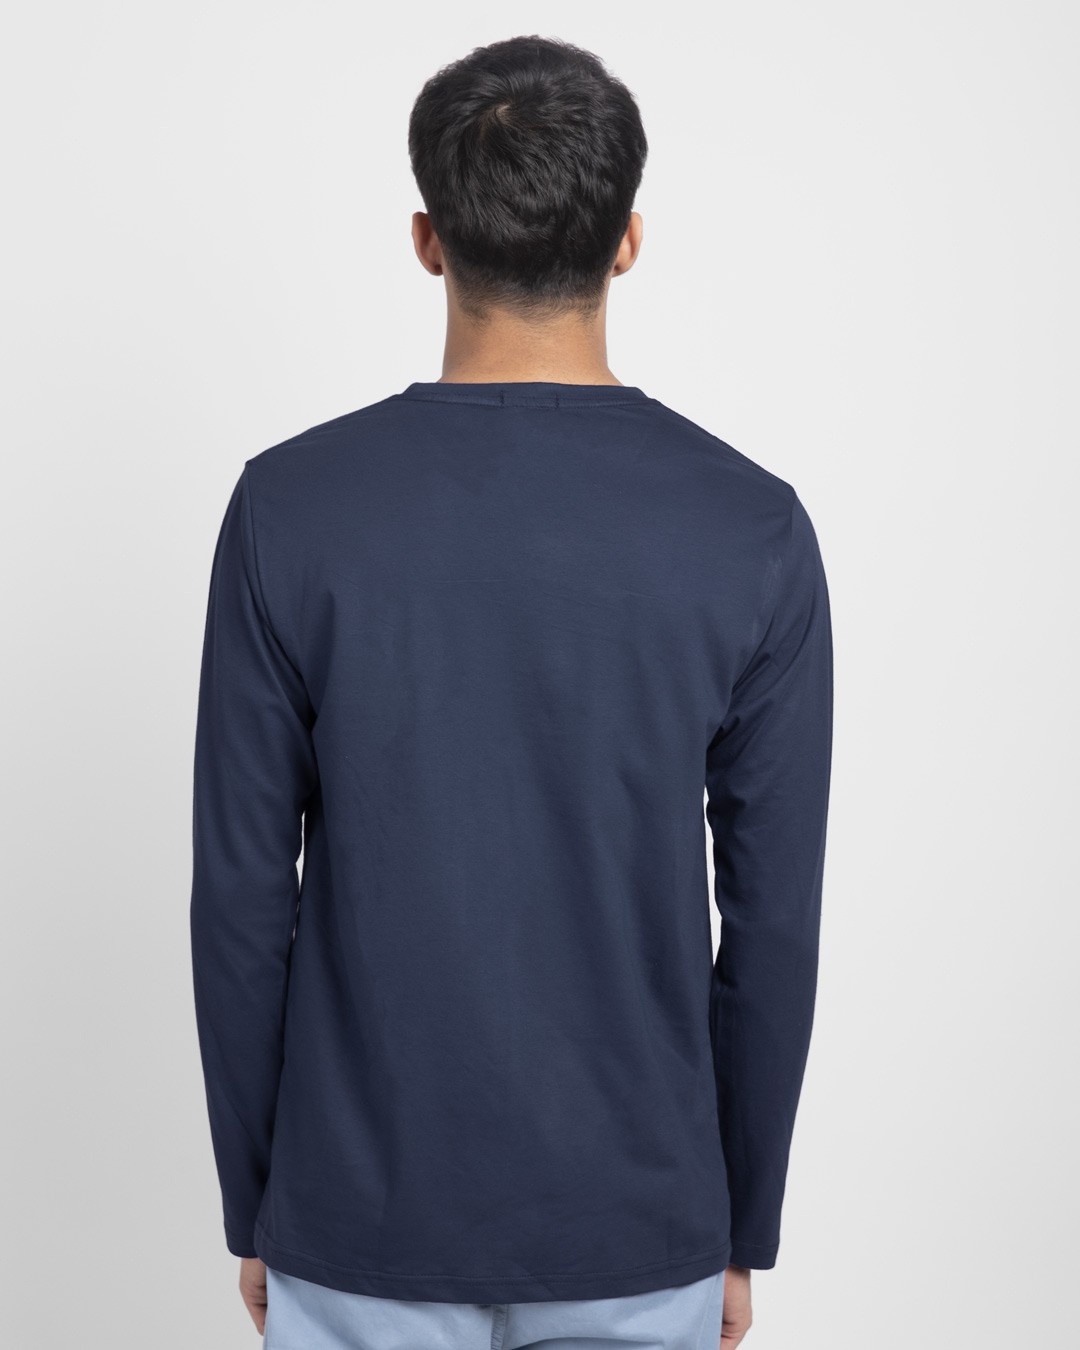 Shop Binod Full Sleeve T-Shirt - Galaxy Blue-Back